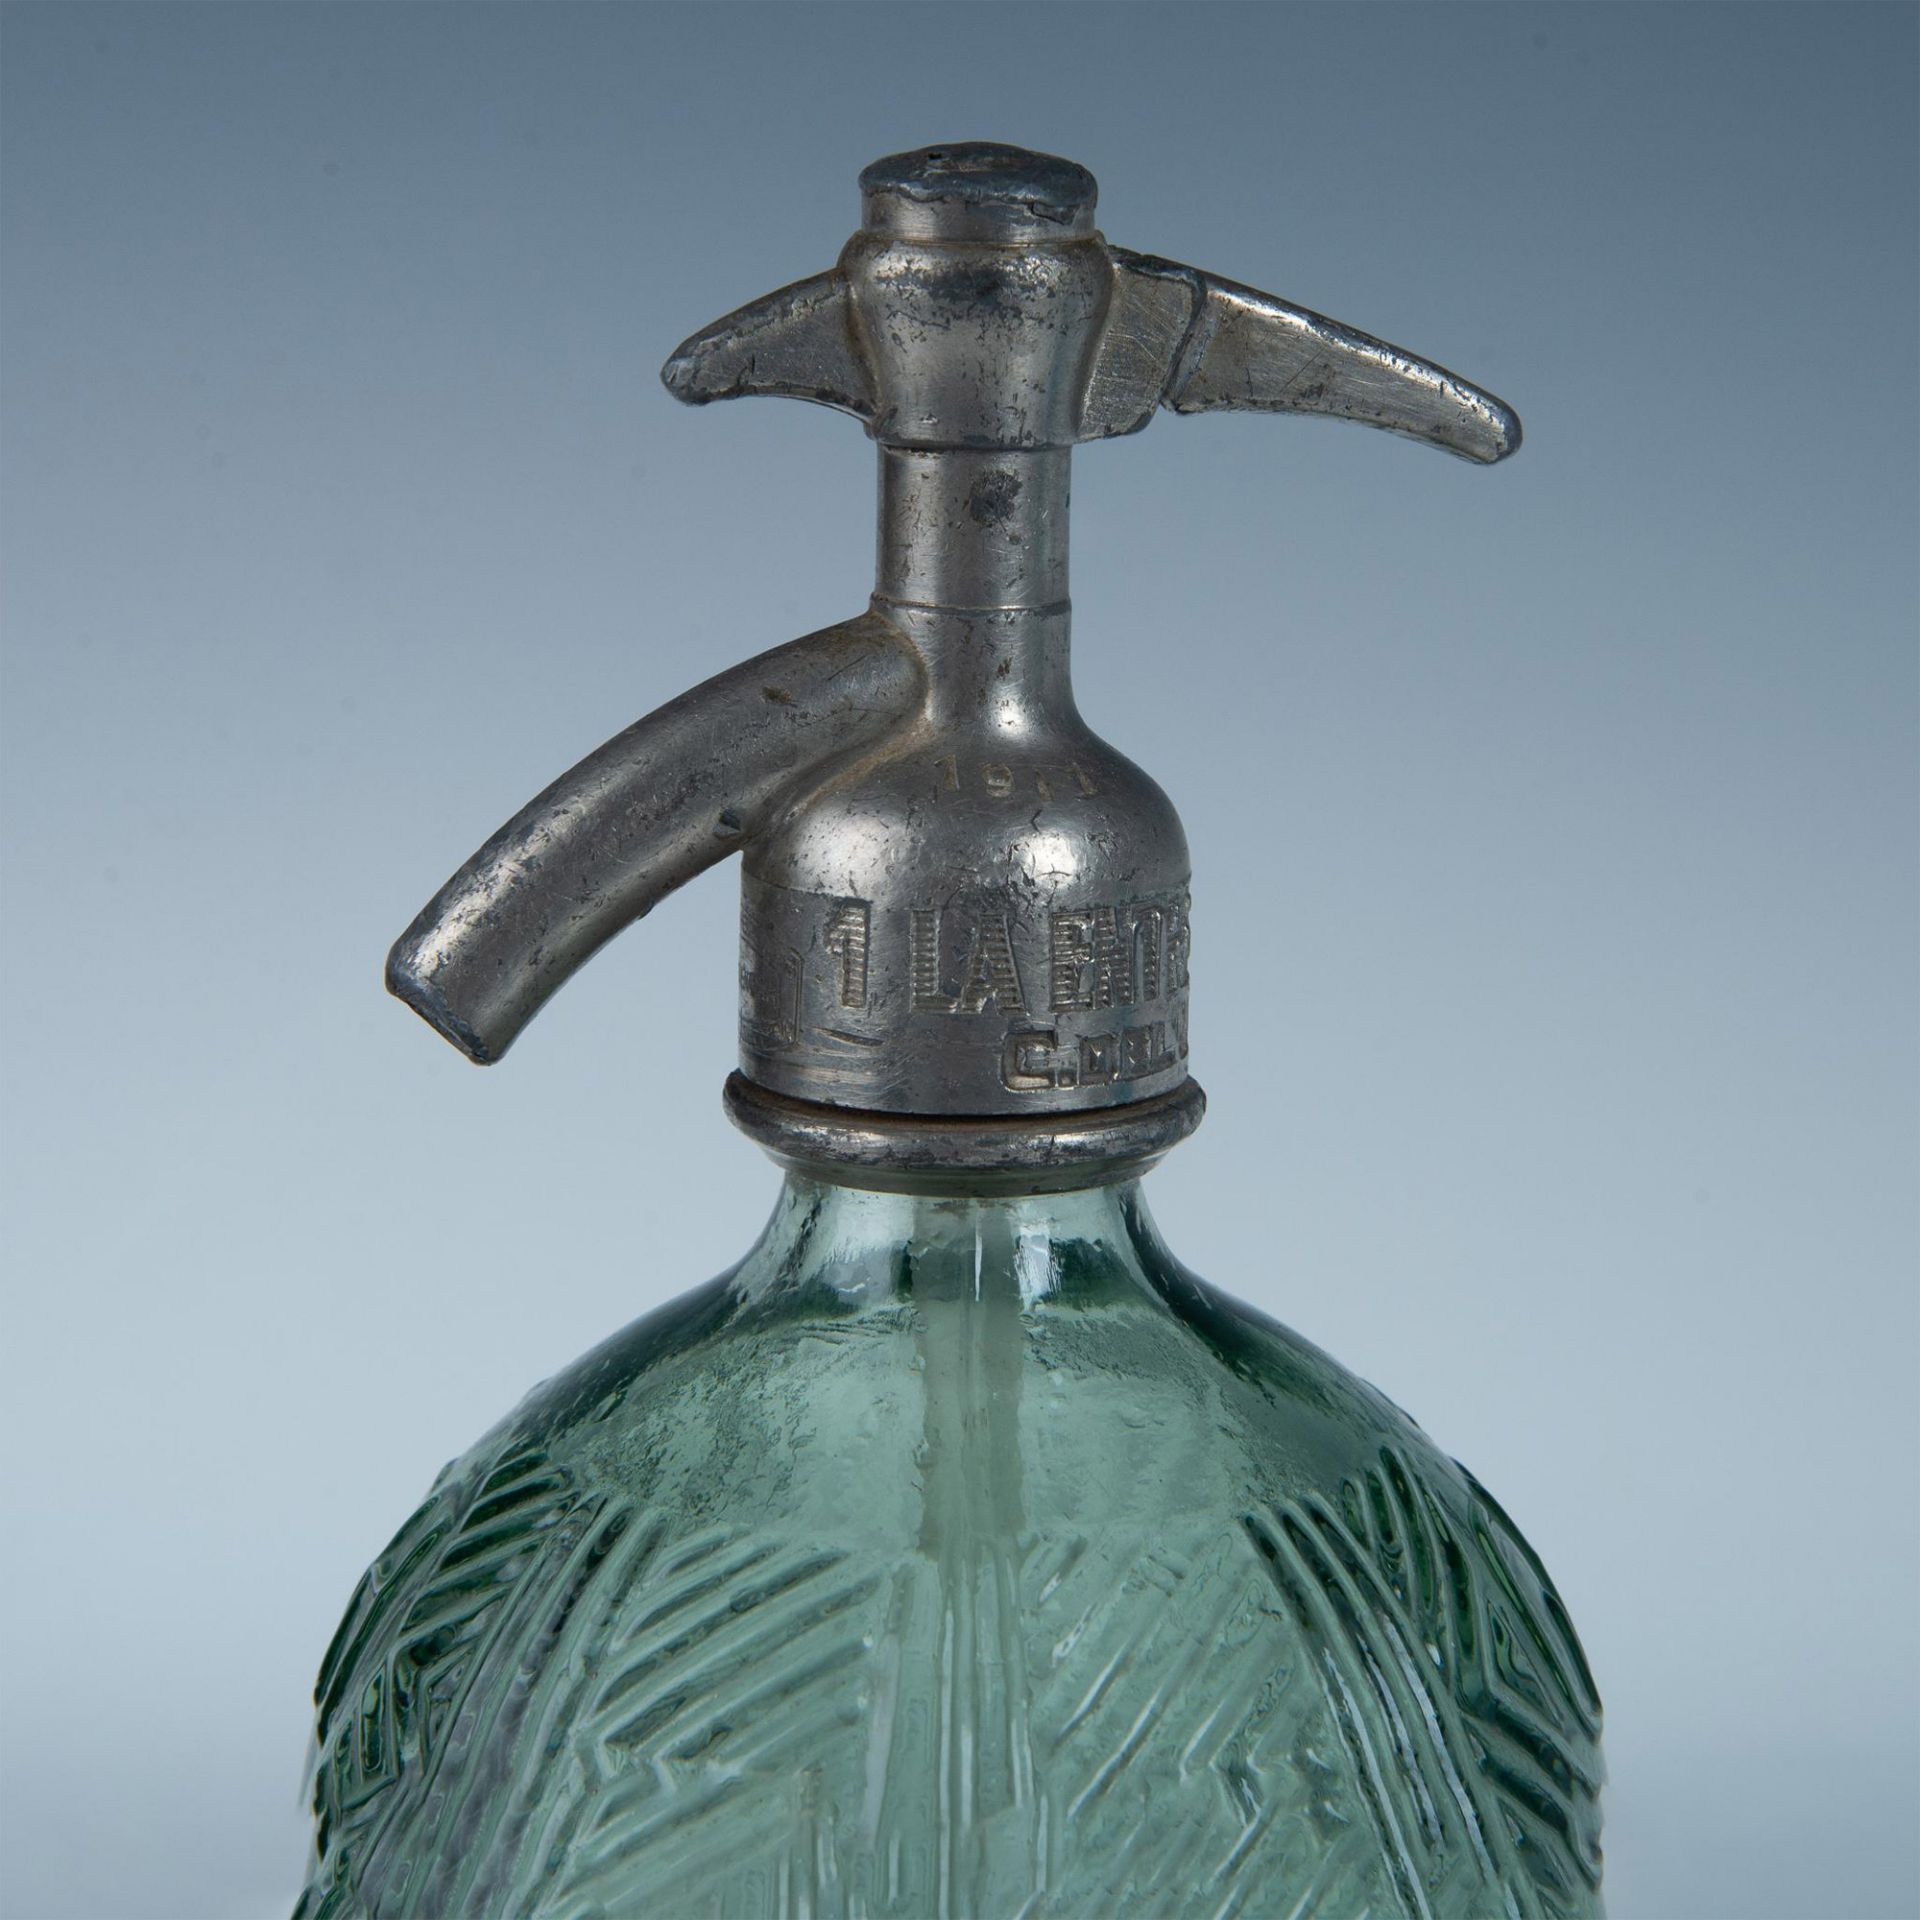 Antique Seltzer Bottle Gonzalez Hnos, Argentina - Image 2 of 7